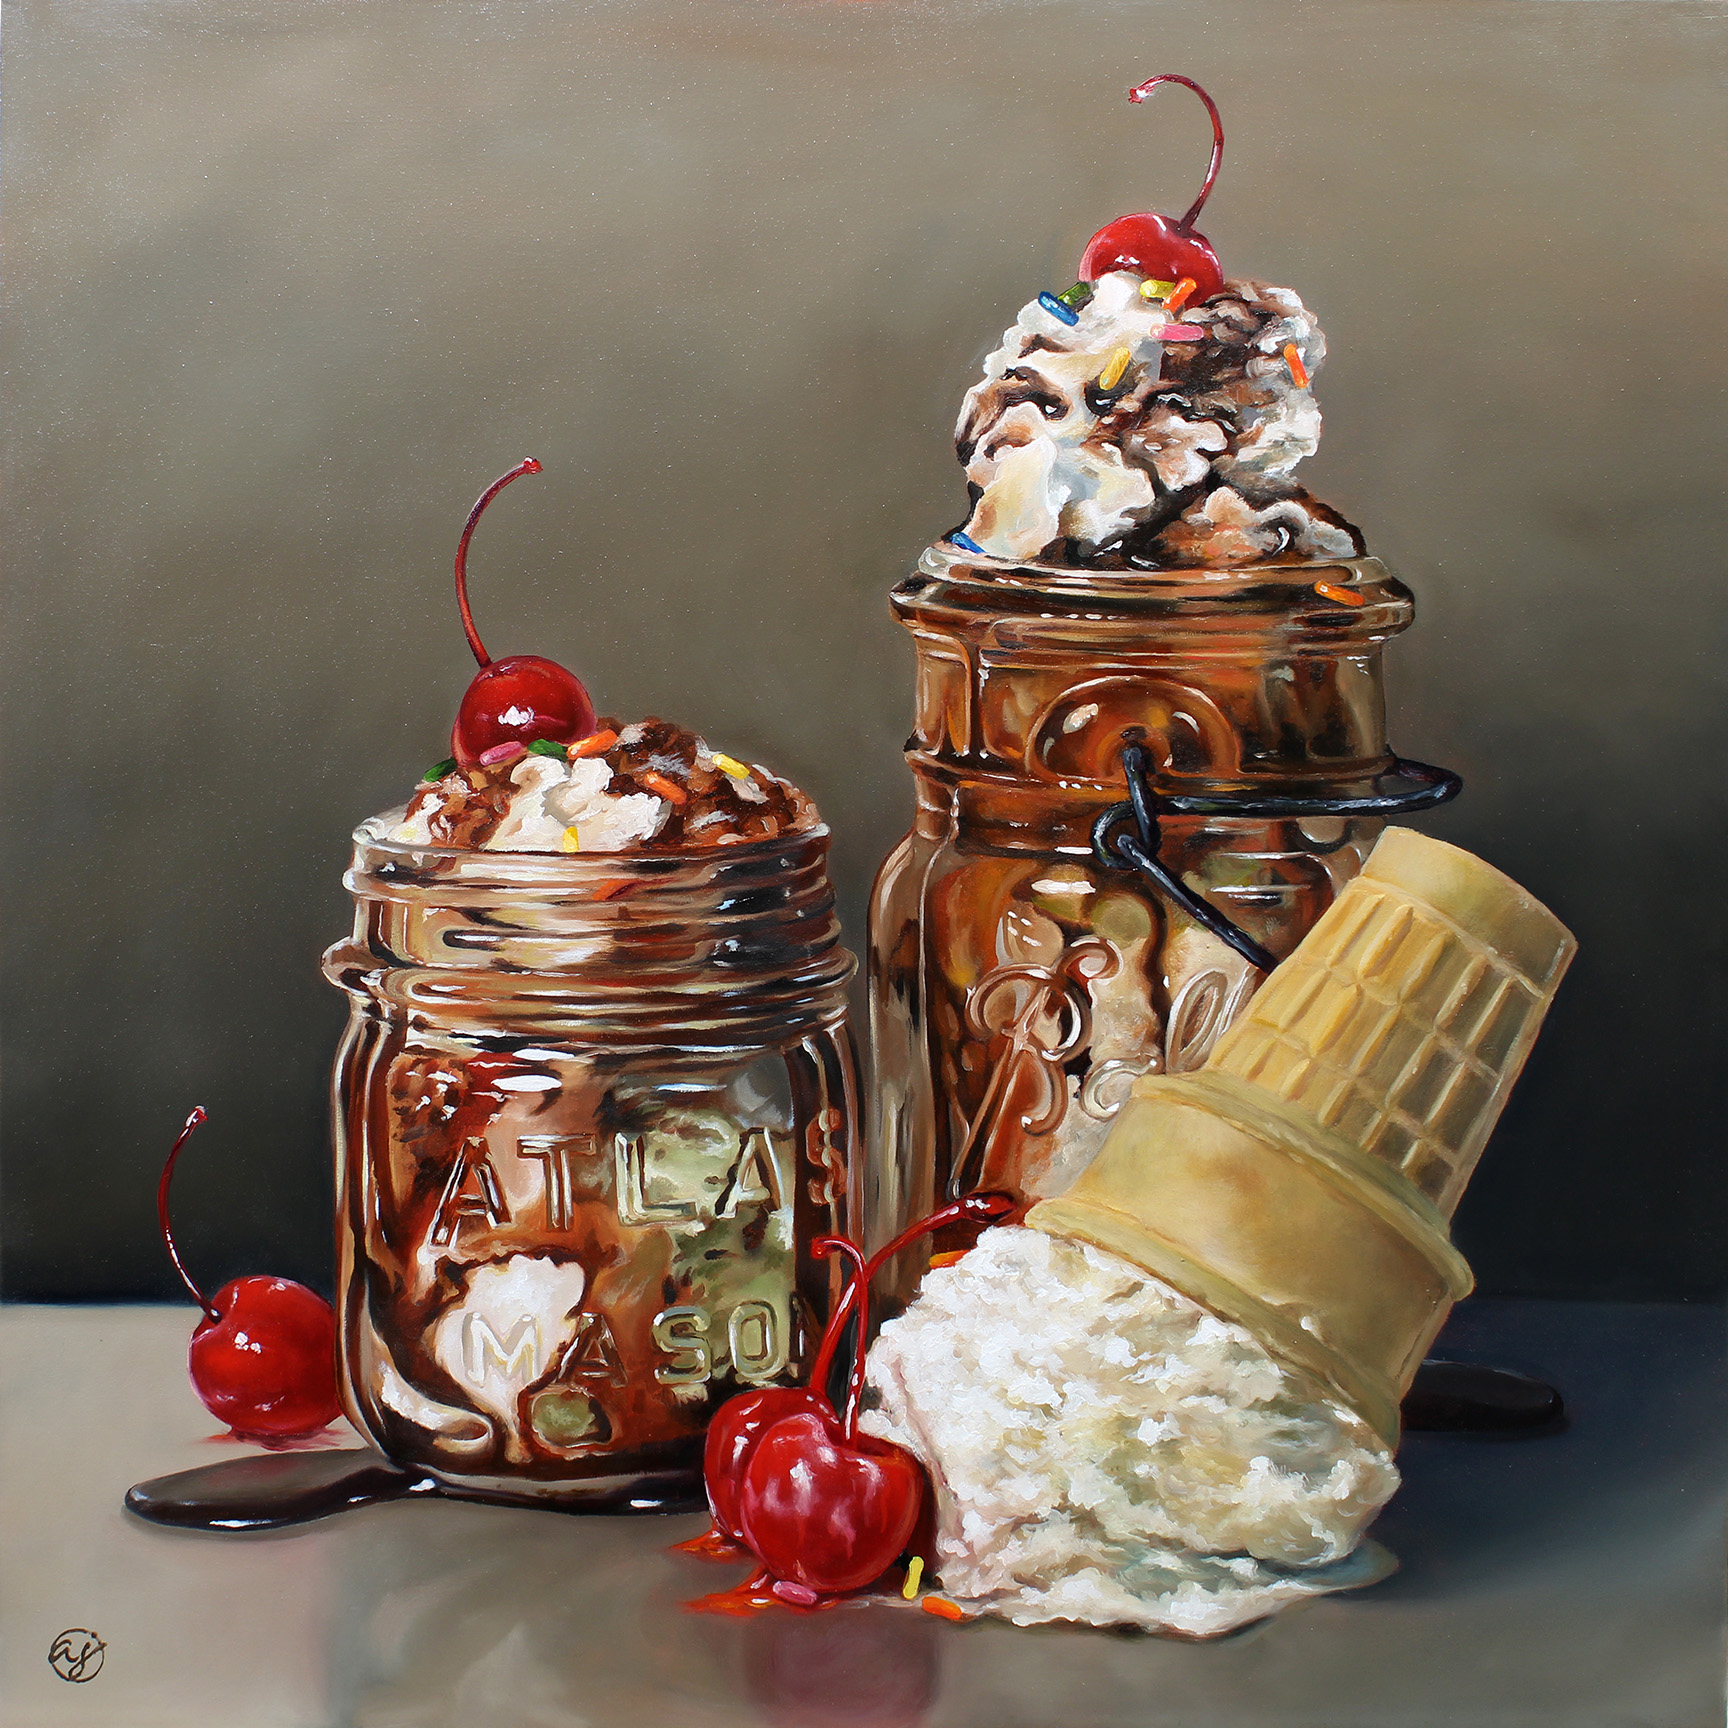 "Ice Cream Social" 24x24 Original Oil Painting by Abra Johnson (Copy)